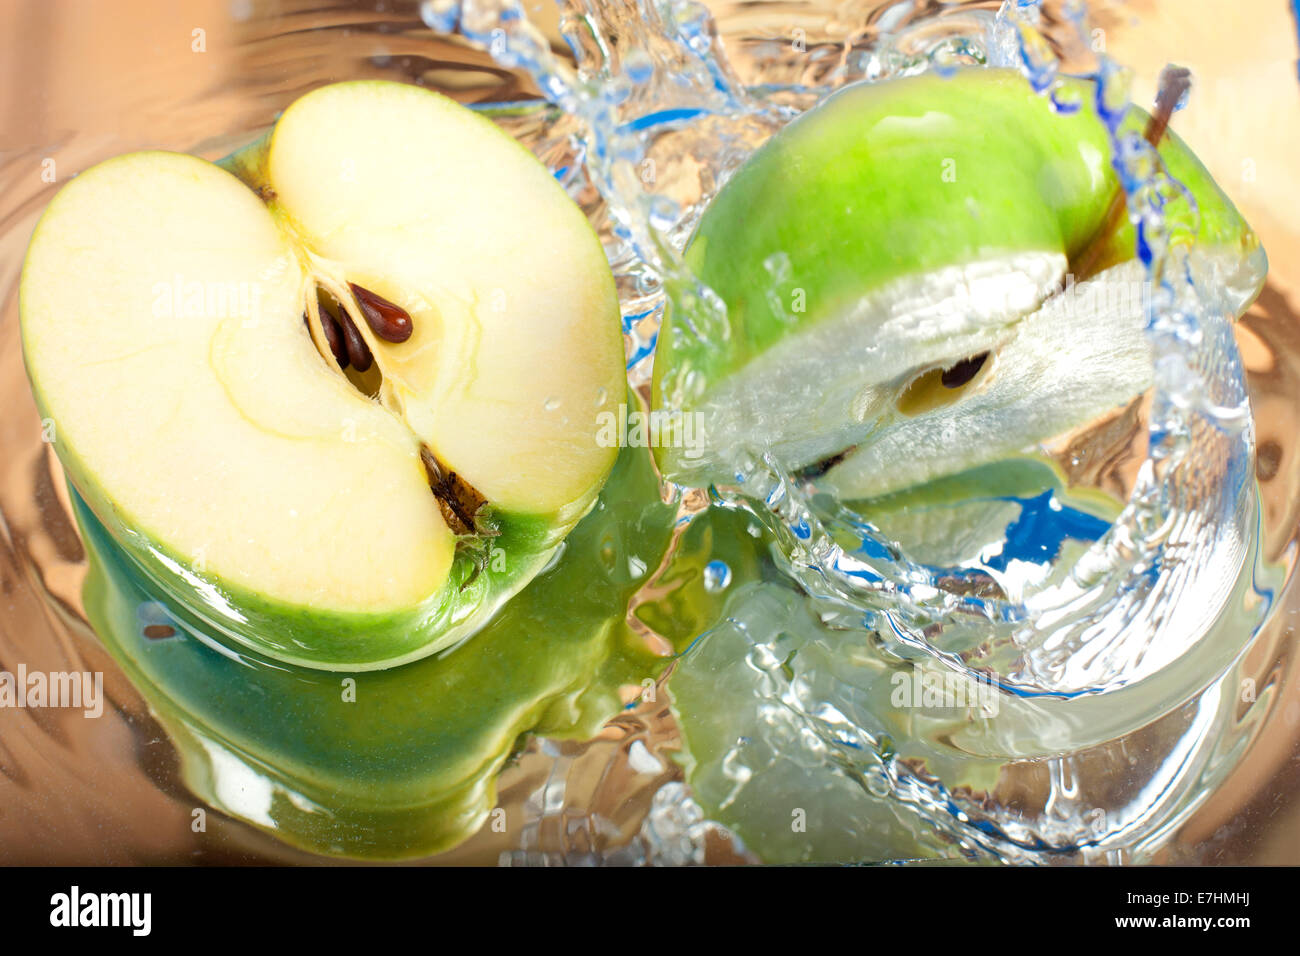 Green apple causing water splash Stock Photo